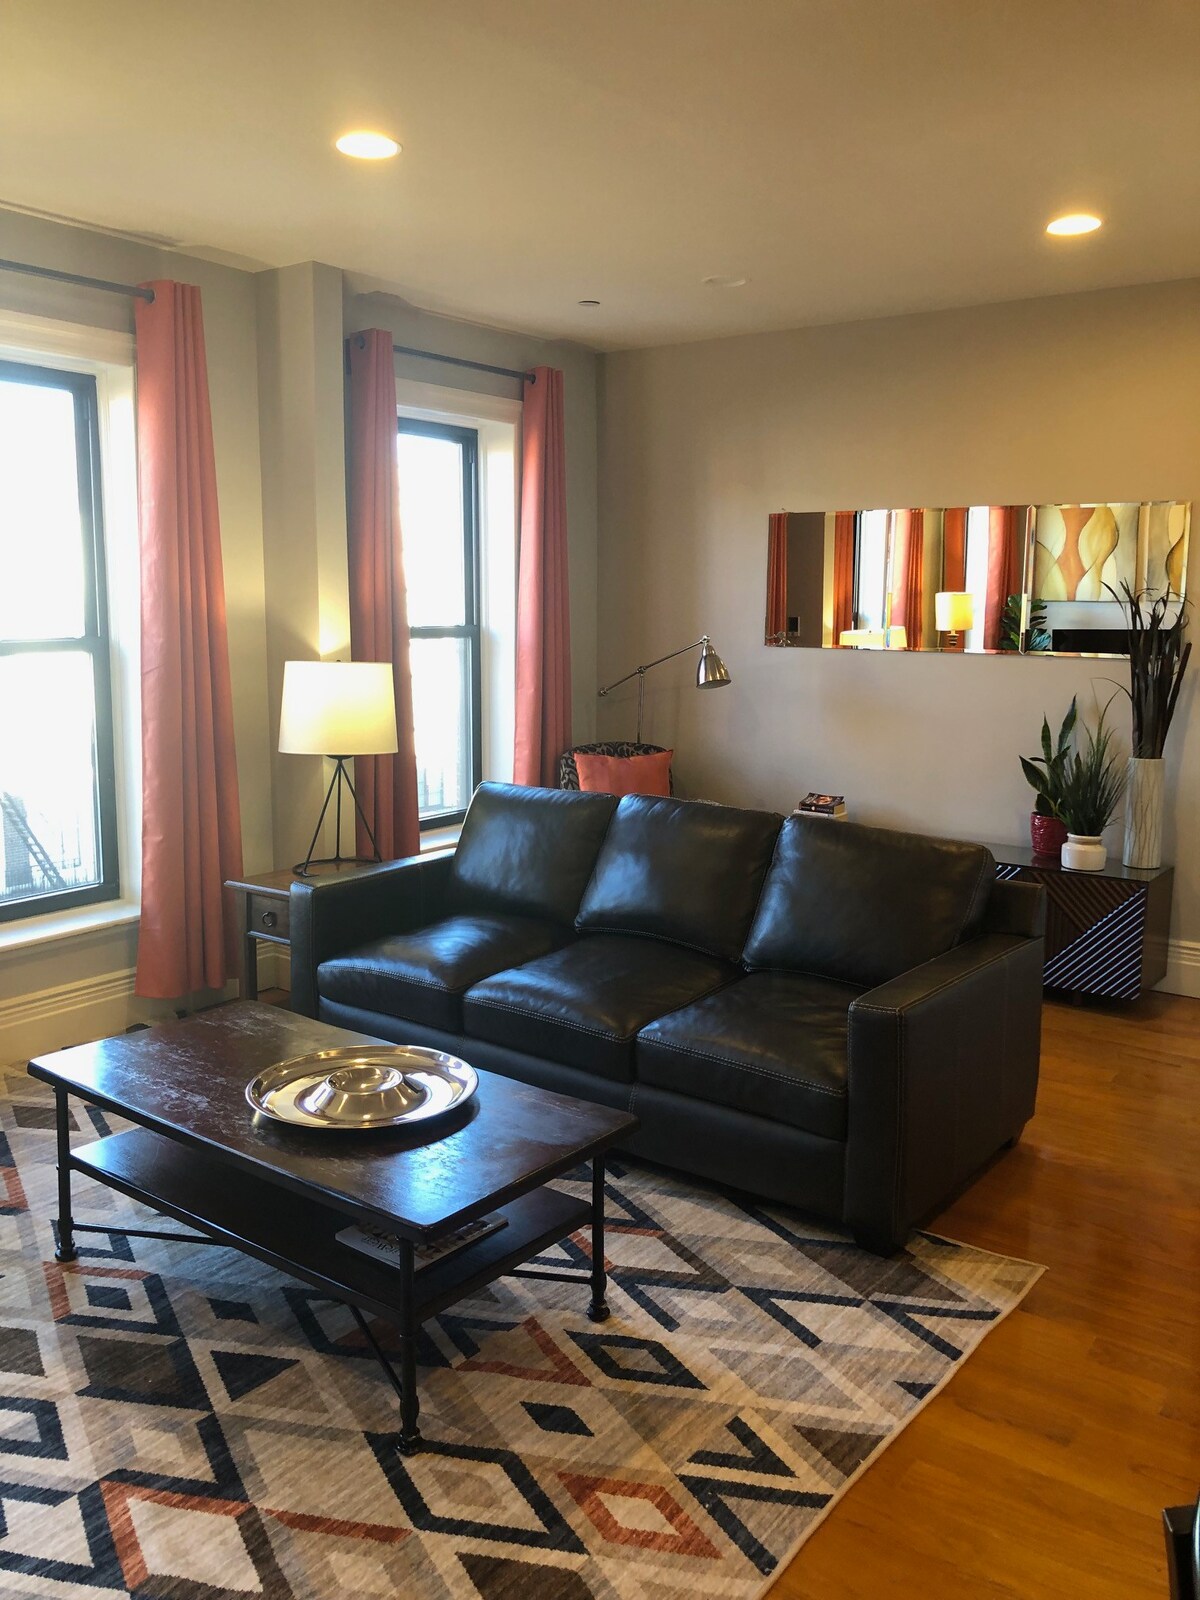 Lefferts Bliss apartment. Starting $129 per nite